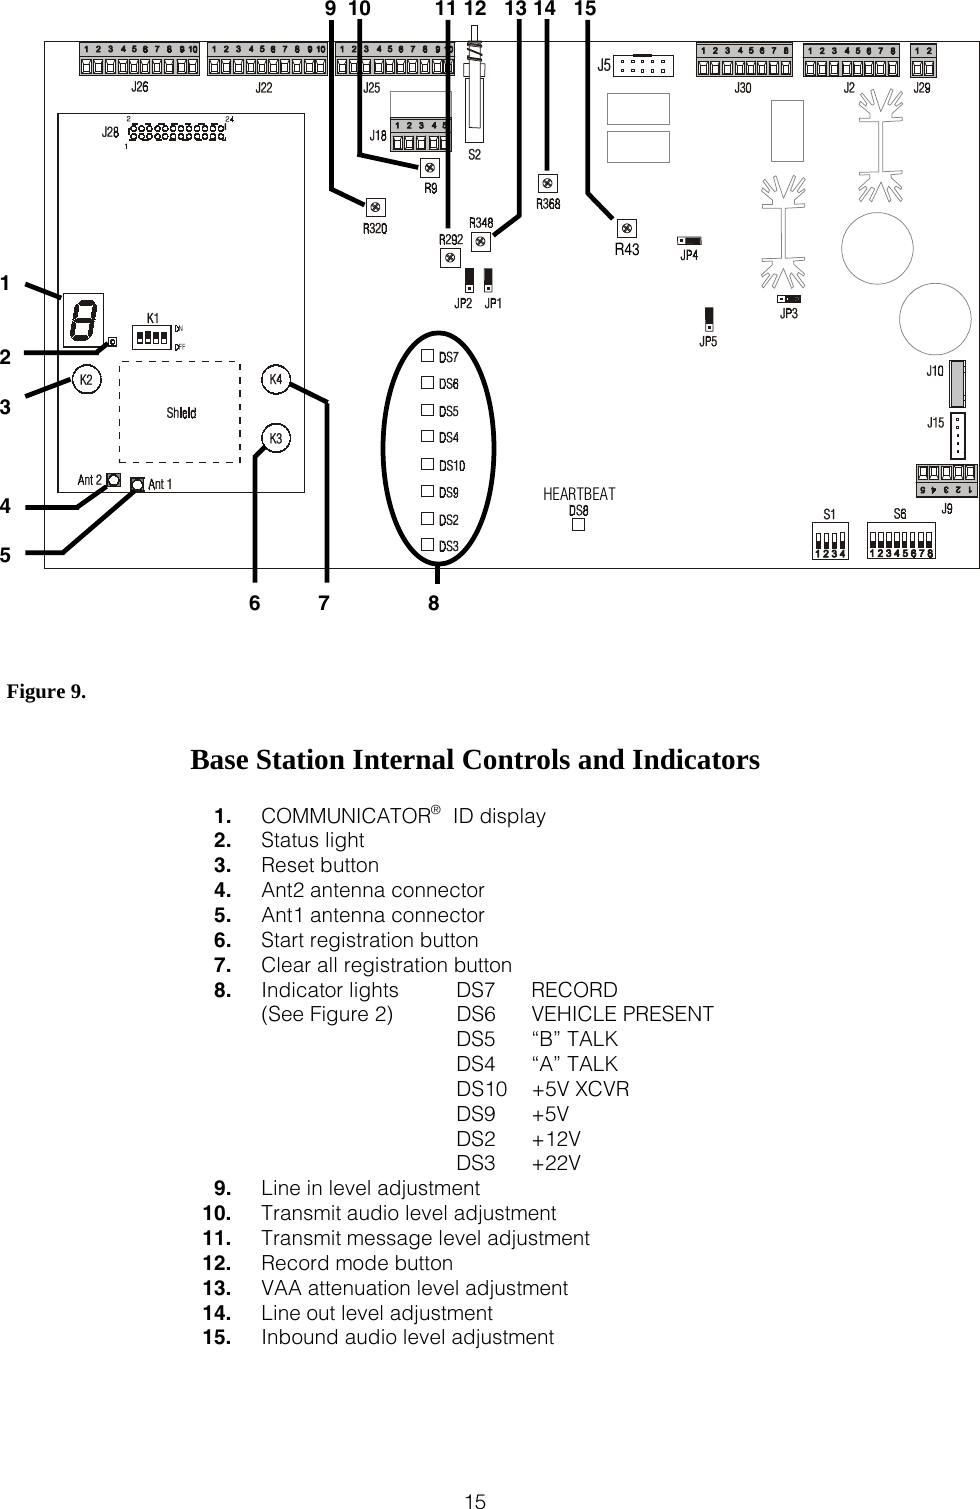  15                   Figure 9.  Base Station Internal Controls and Indicators  1.  COMMUNICATOR®  ID display 2.  Status light 3.  Reset button 4.  Ant2 antenna connector 5.  Ant1 antenna connector 6.  Start registration button 7.  Clear all registration button 8.  Indicator lights  DS7  RECORD (See Figure 2)  DS6  VEHICLE PRESENT    DS5 “B” TALK    DS4 “A” TALK    DS10 +5V XCVR    DS9 +5V    DS2 +12V    DS3 +22V 9.  Line in level adjustment 10.  Transmit audio level adjustment 11.  Transmit message level adjustment 12.  Record mode button 13.  VAA attenuation level adjustment 14.  Line out level adjustment 15.  Inbound audio level adjustment   R43 6          7                 8 9  10           11 12   13 14   15 1   2  3    4  5 HEARTBEAT 